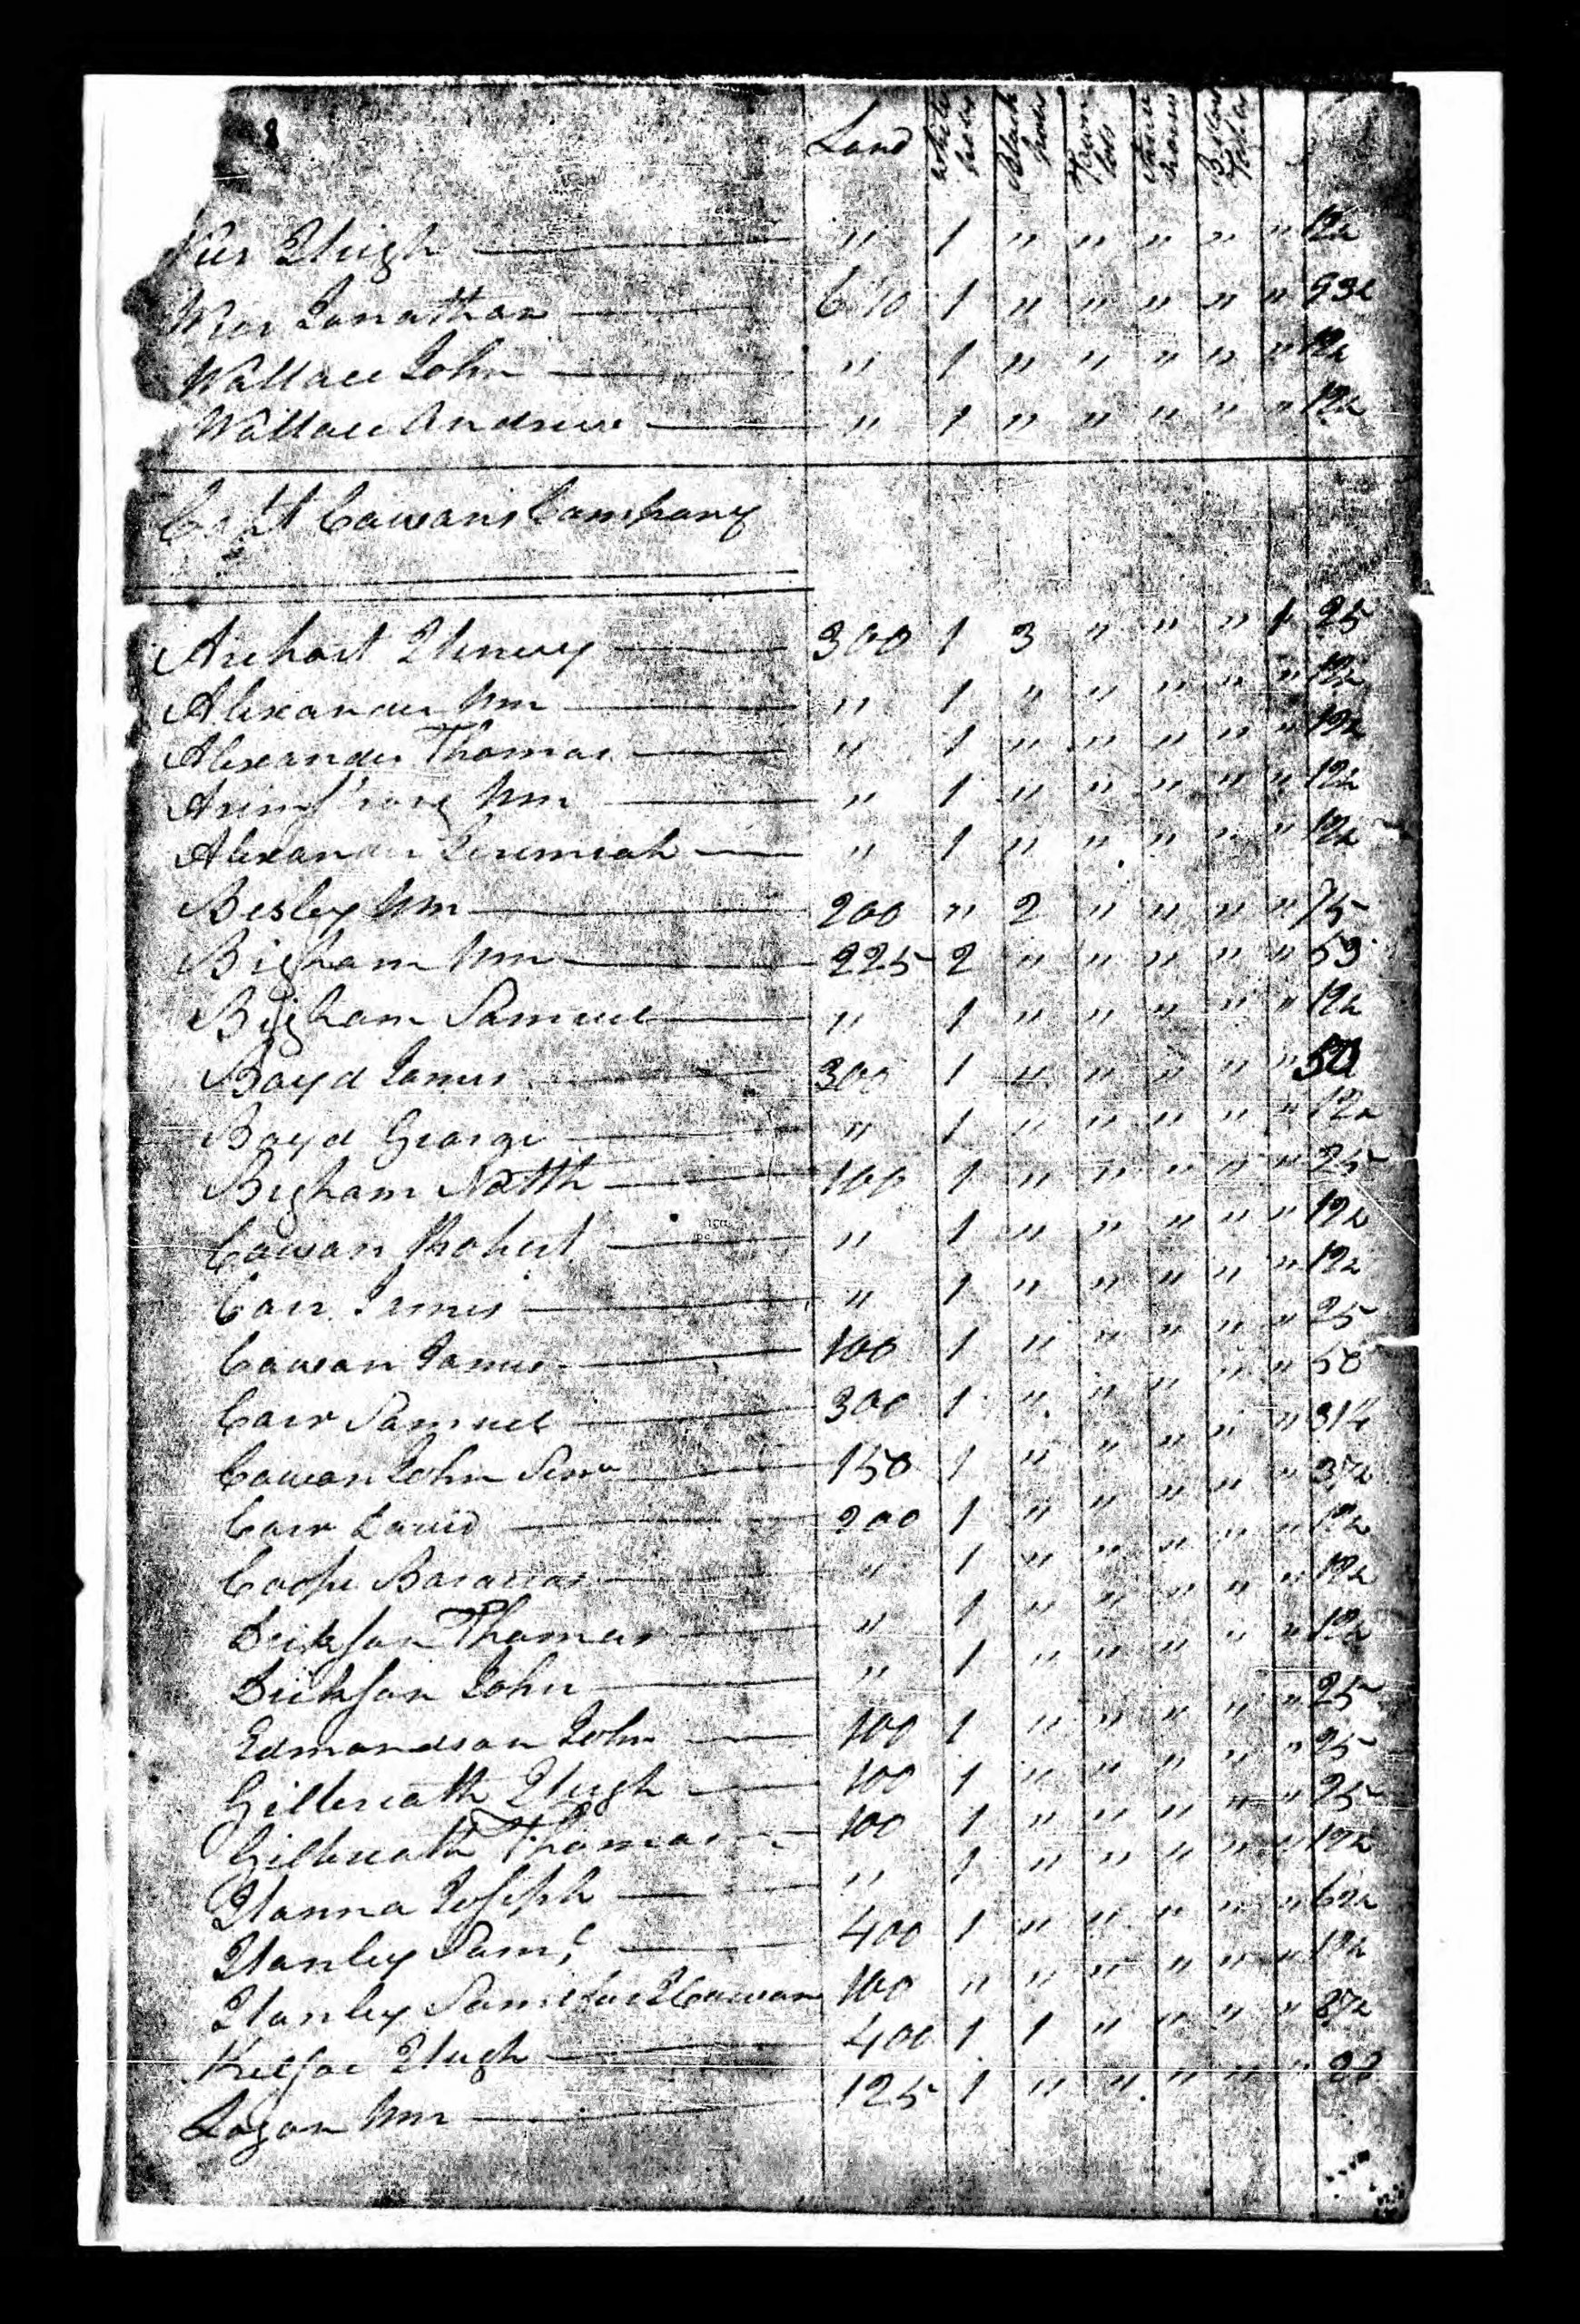 Blount County TN 1801 Tax List - Page 08